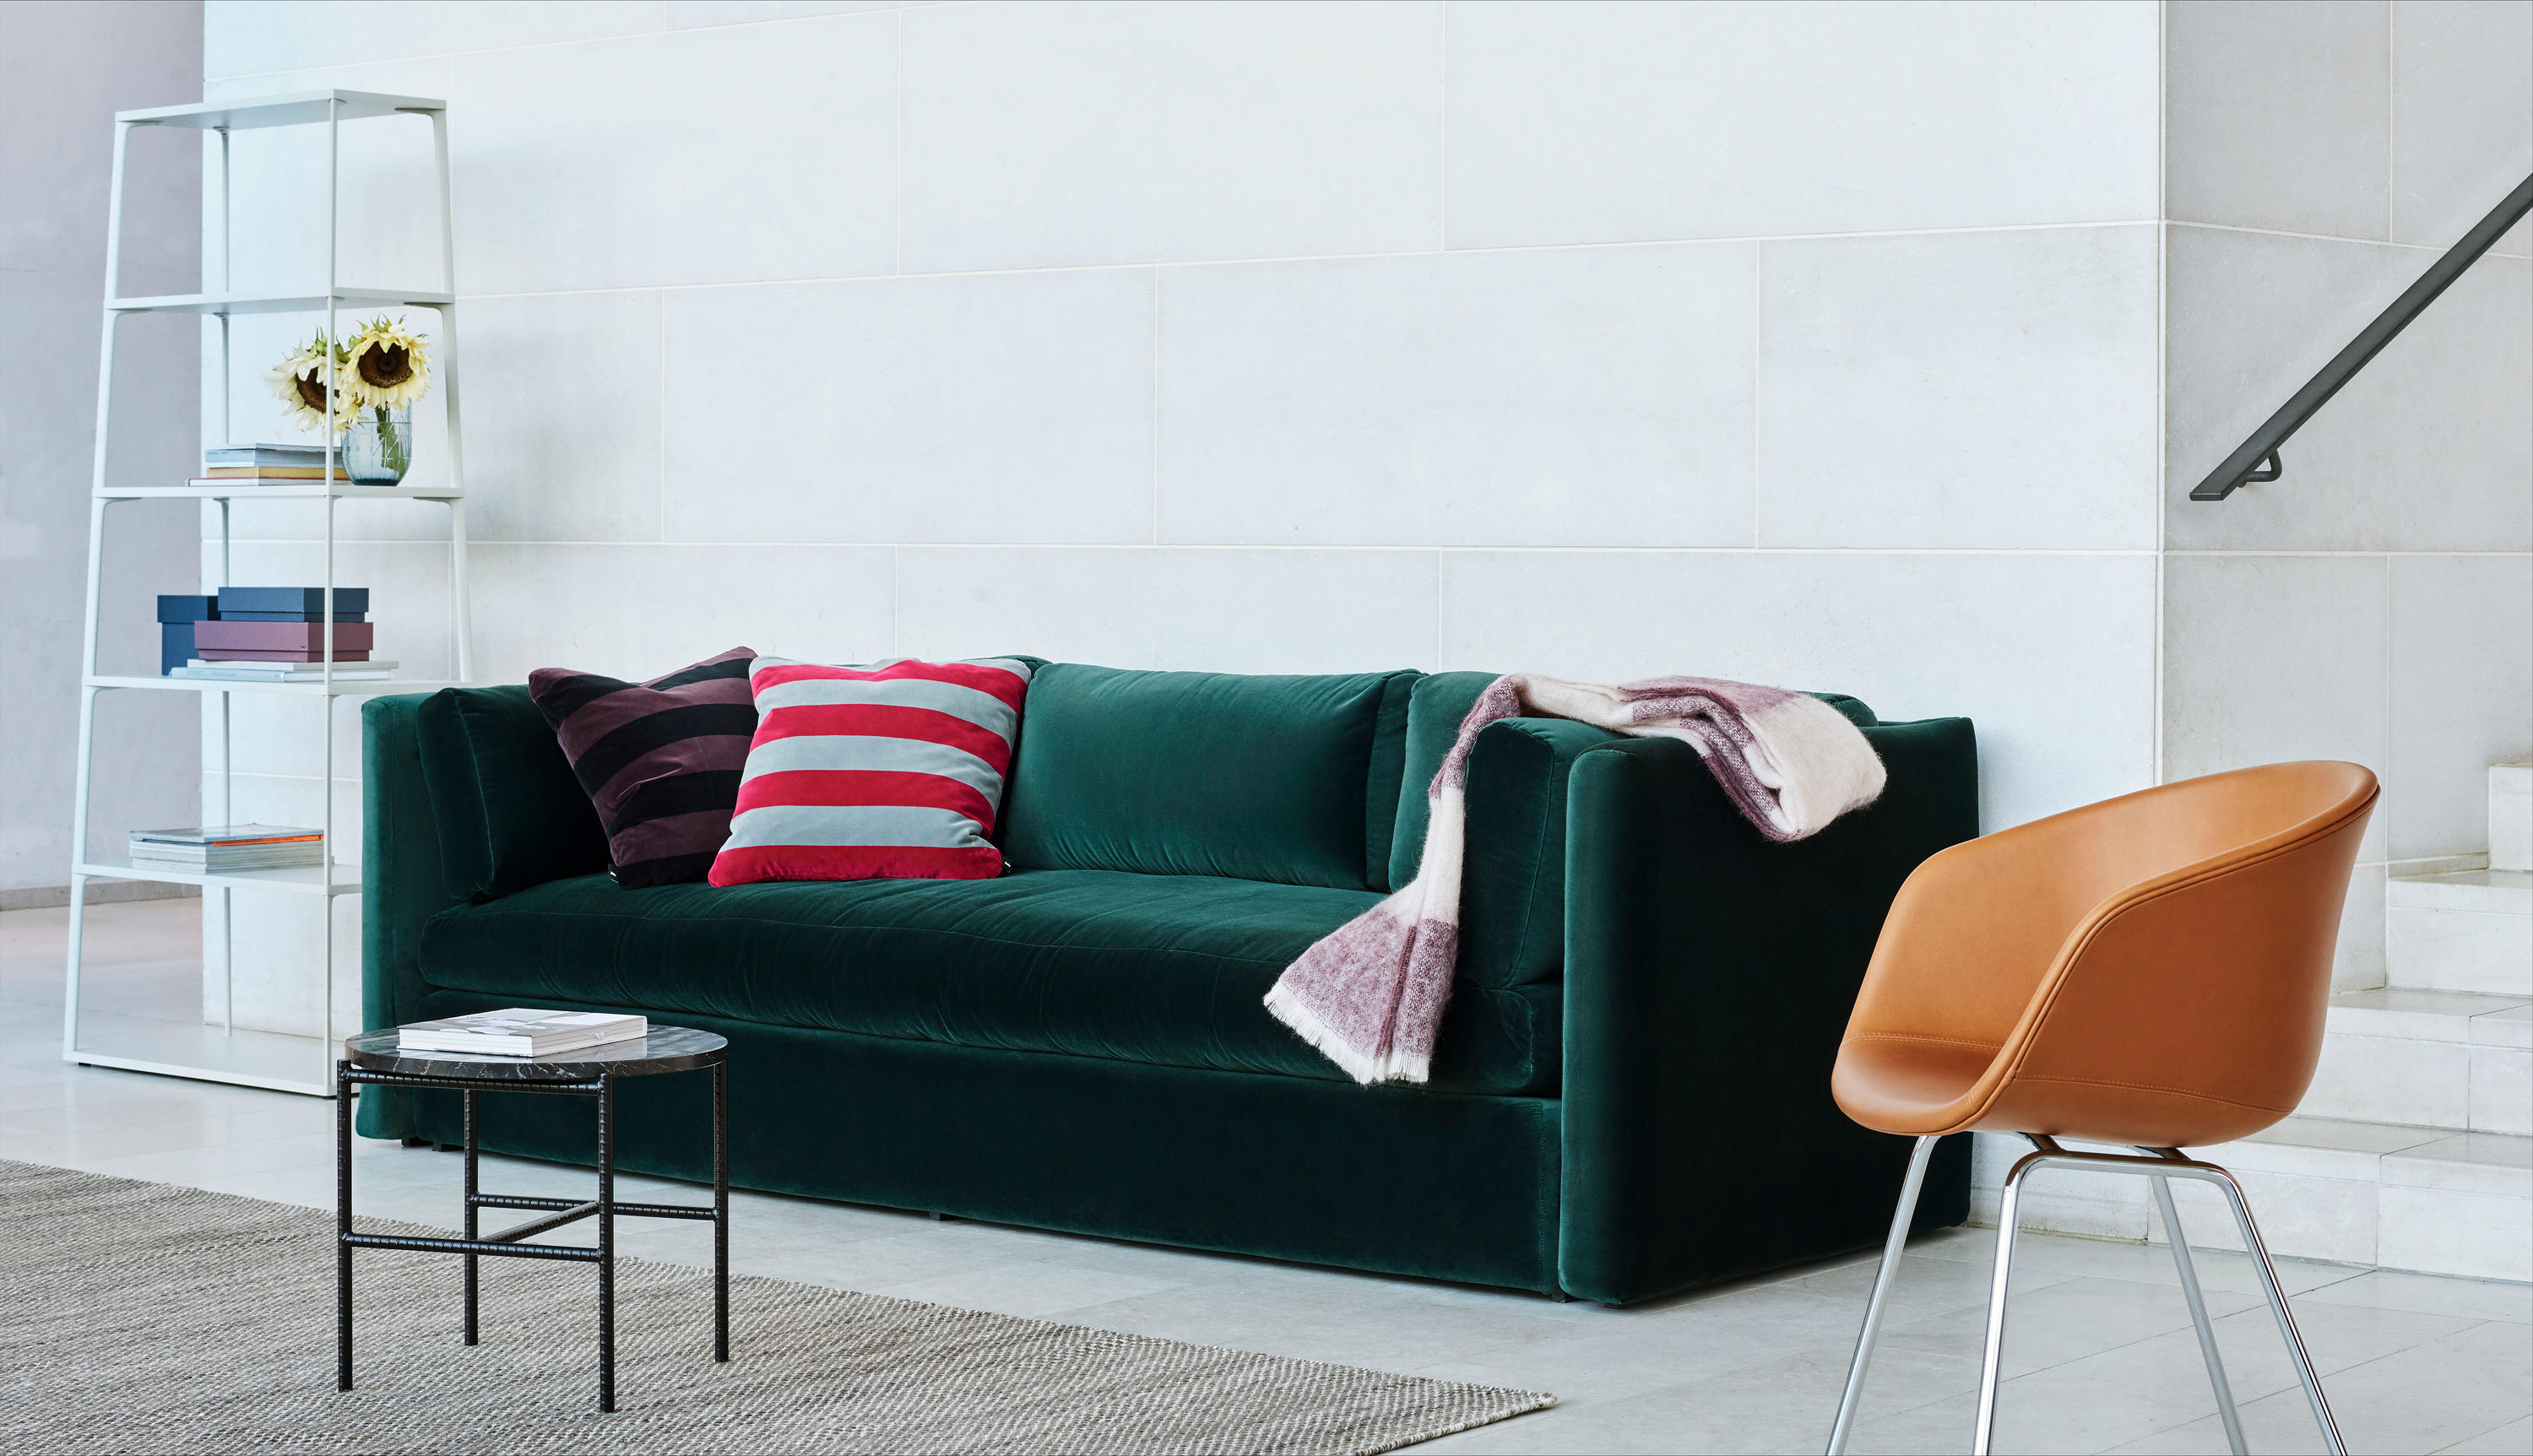 Hackney 2 seater & designer furniture | Architonic